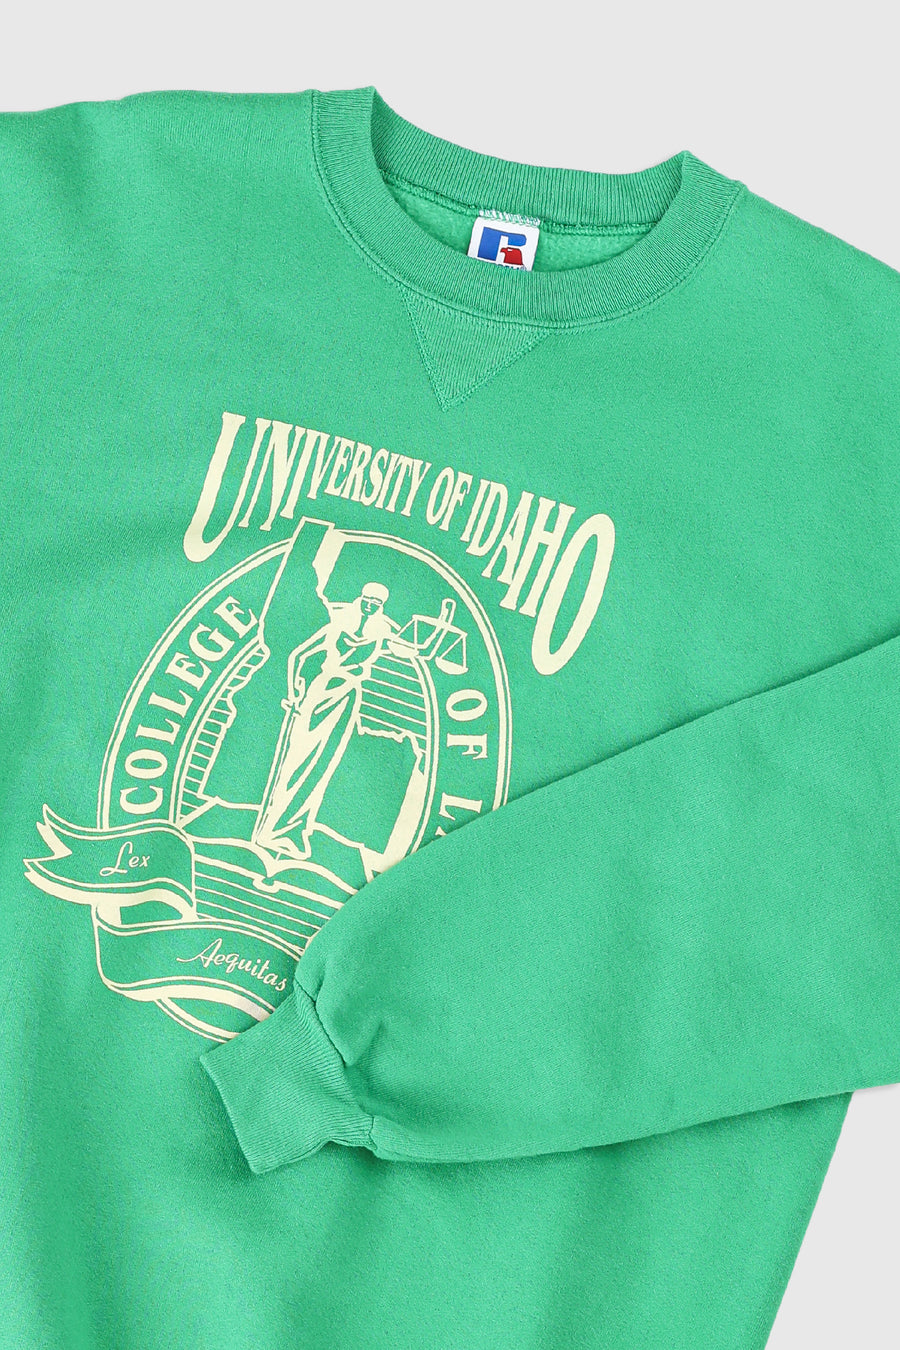 Vintage University of Idaho Sweatshirt